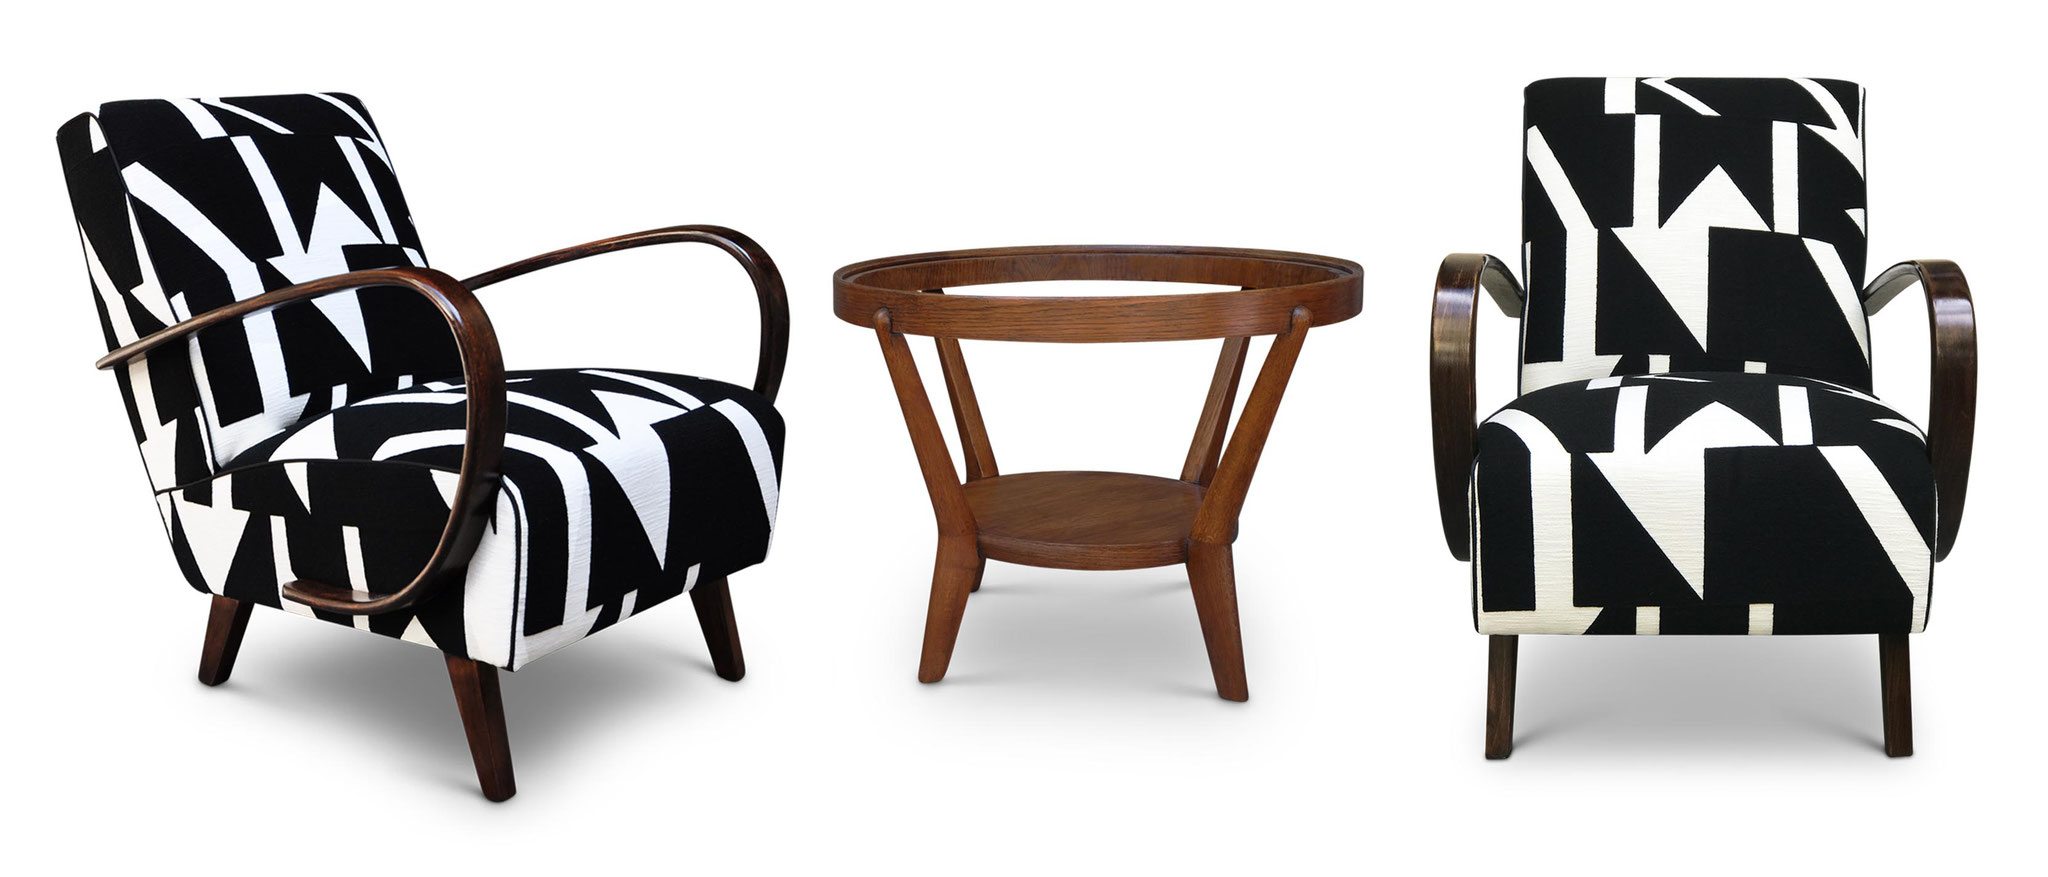 Art Deco Chair Modern Fabric - Mid Century Modern Original Chairs And  Furniture